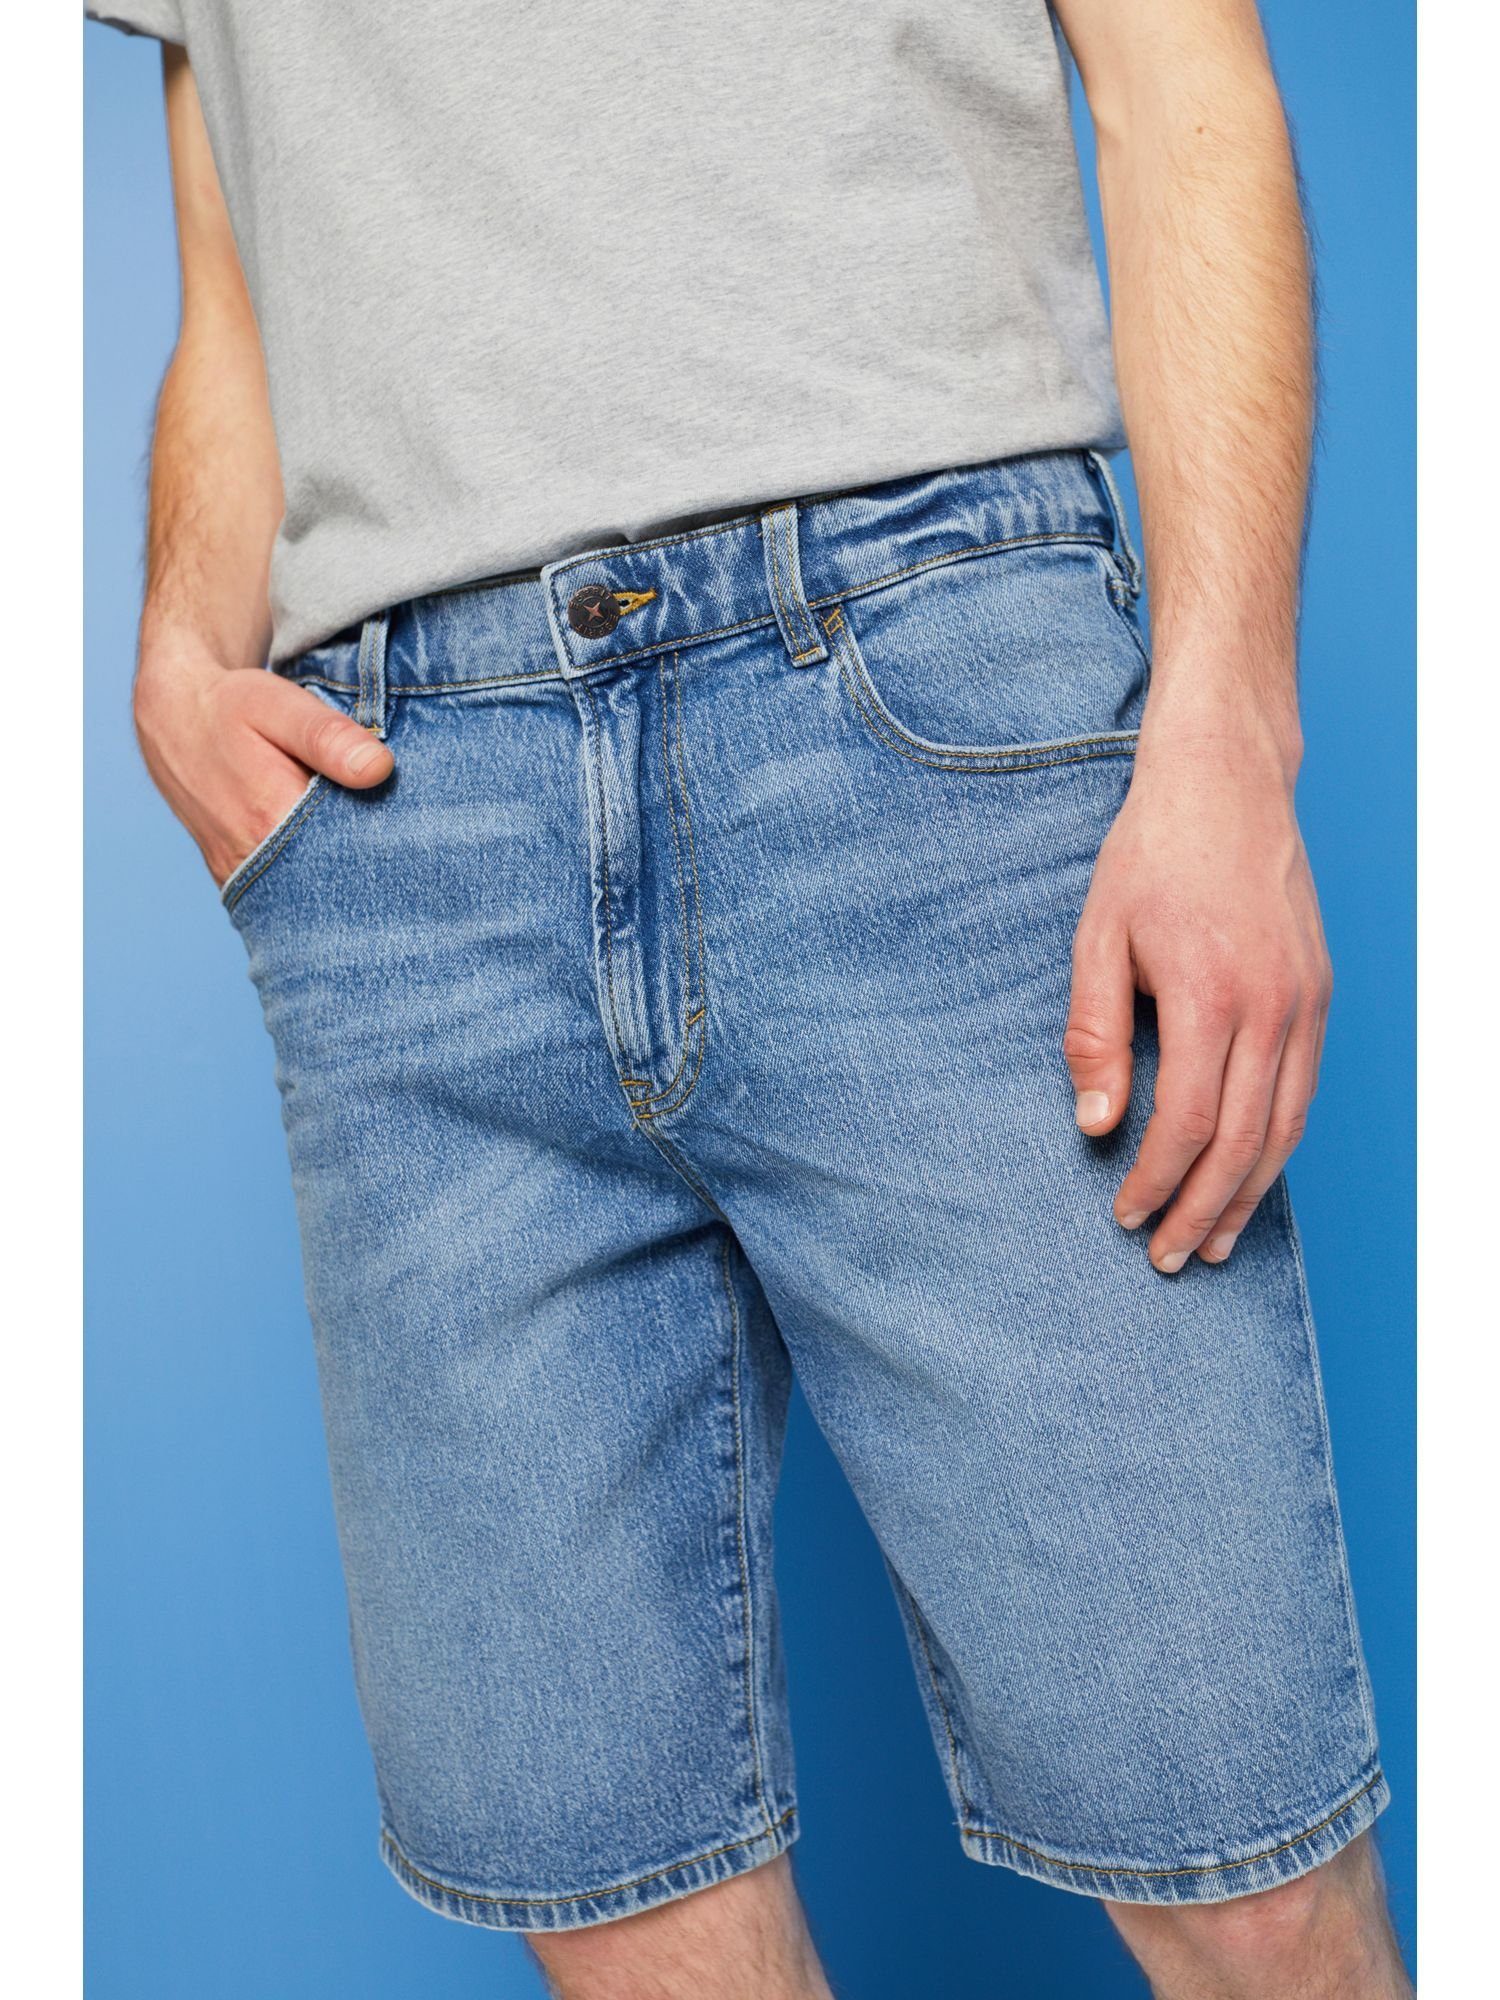 MEDIUM Jeansshorts Jeans-Bermudashorts by BLUE WASHED Esprit edc